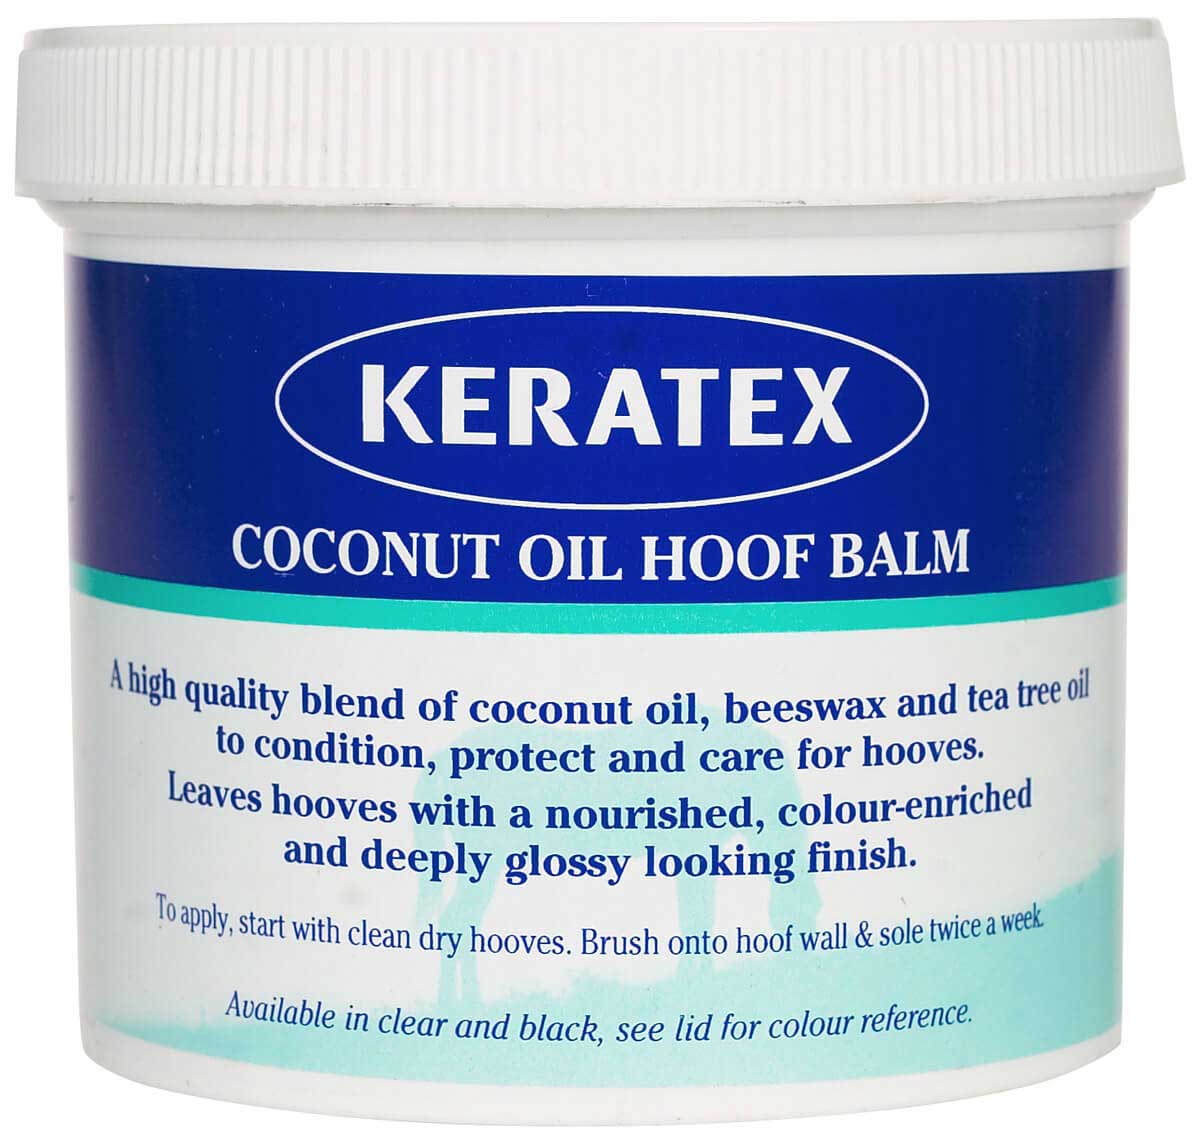 Image result for keratex coconut oil hoof balm